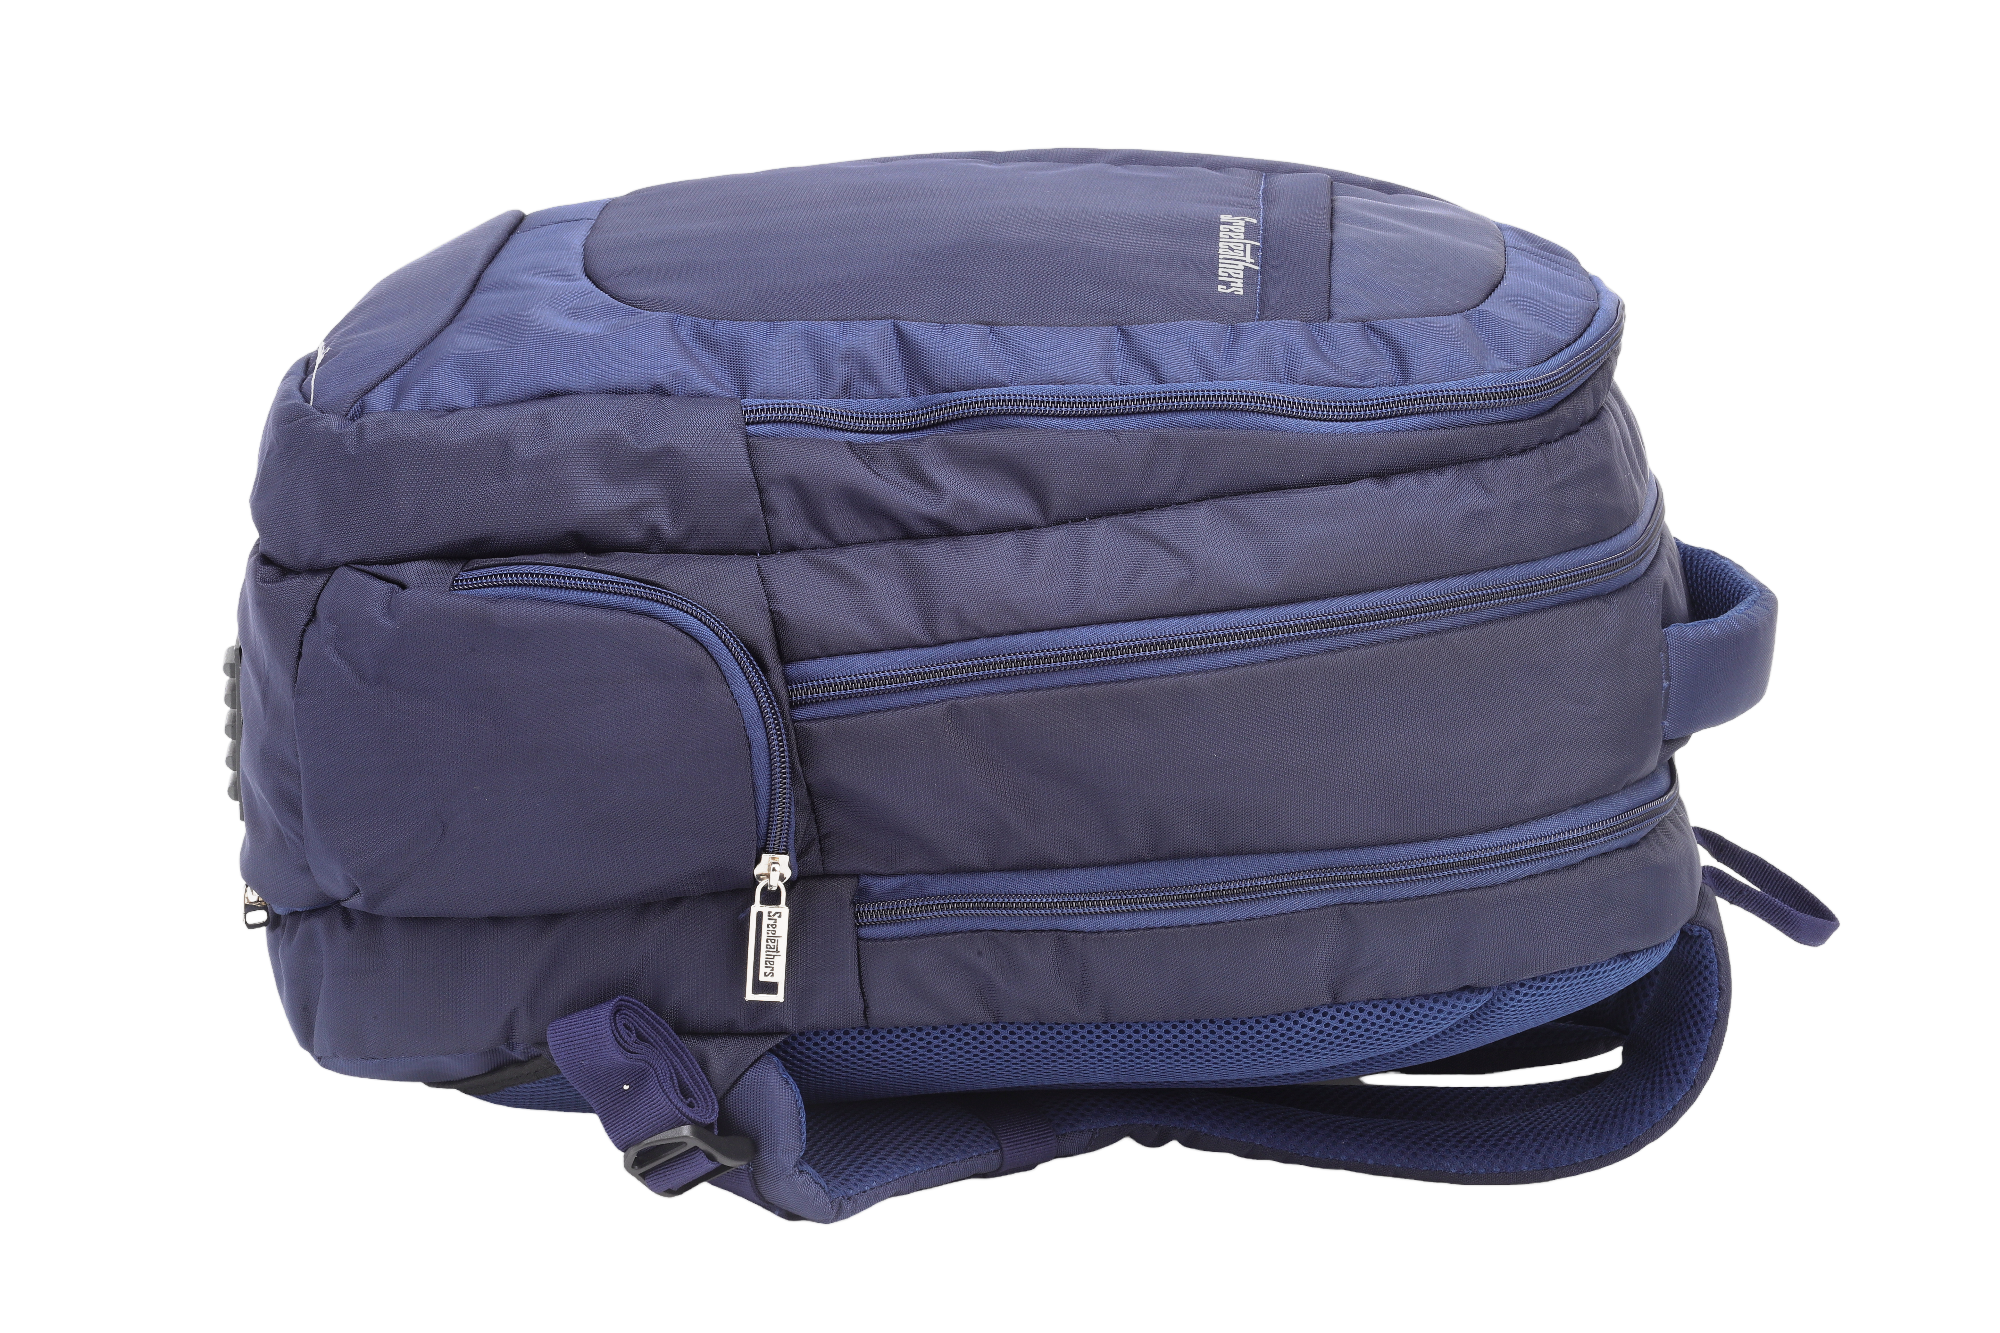 Backpack bags variety at... - Sreeleathers Gurgaon | Facebook